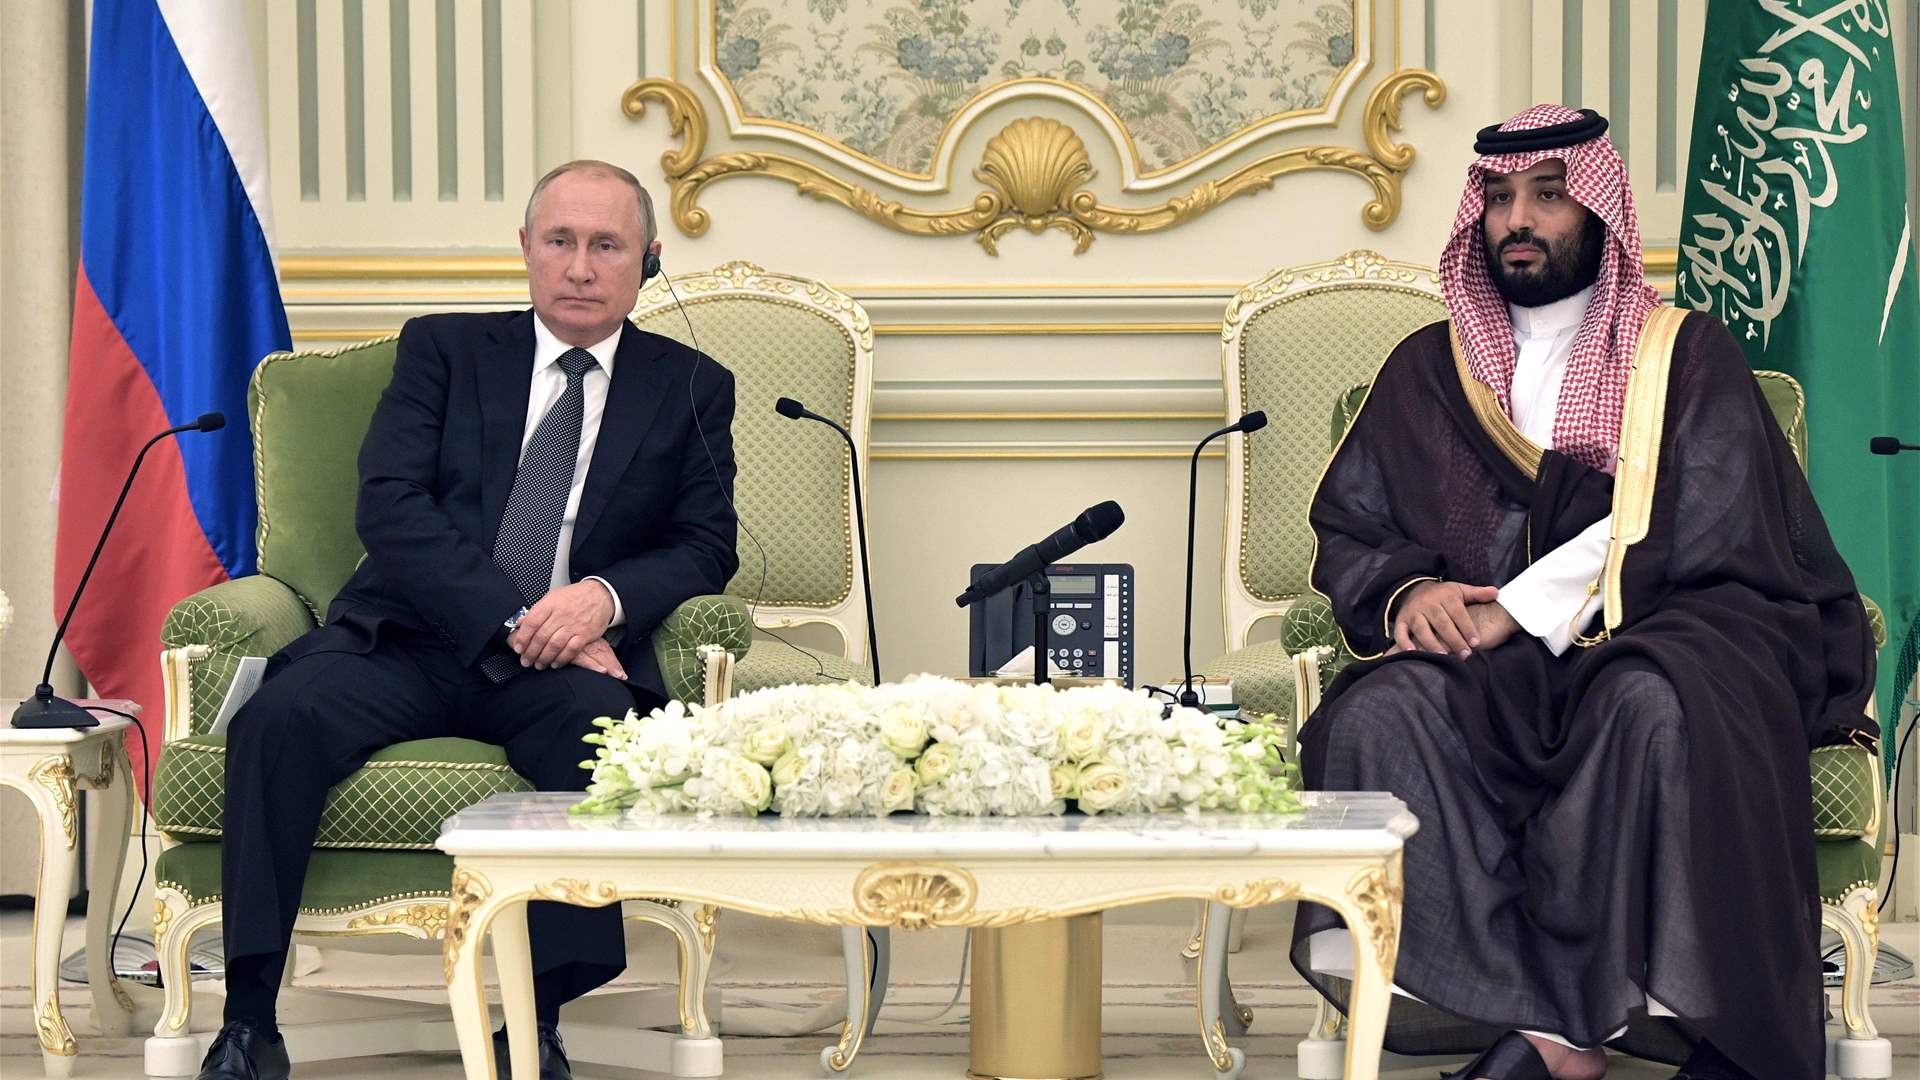 Putin and Saudi crown prince discuss OPEC+ cooperation